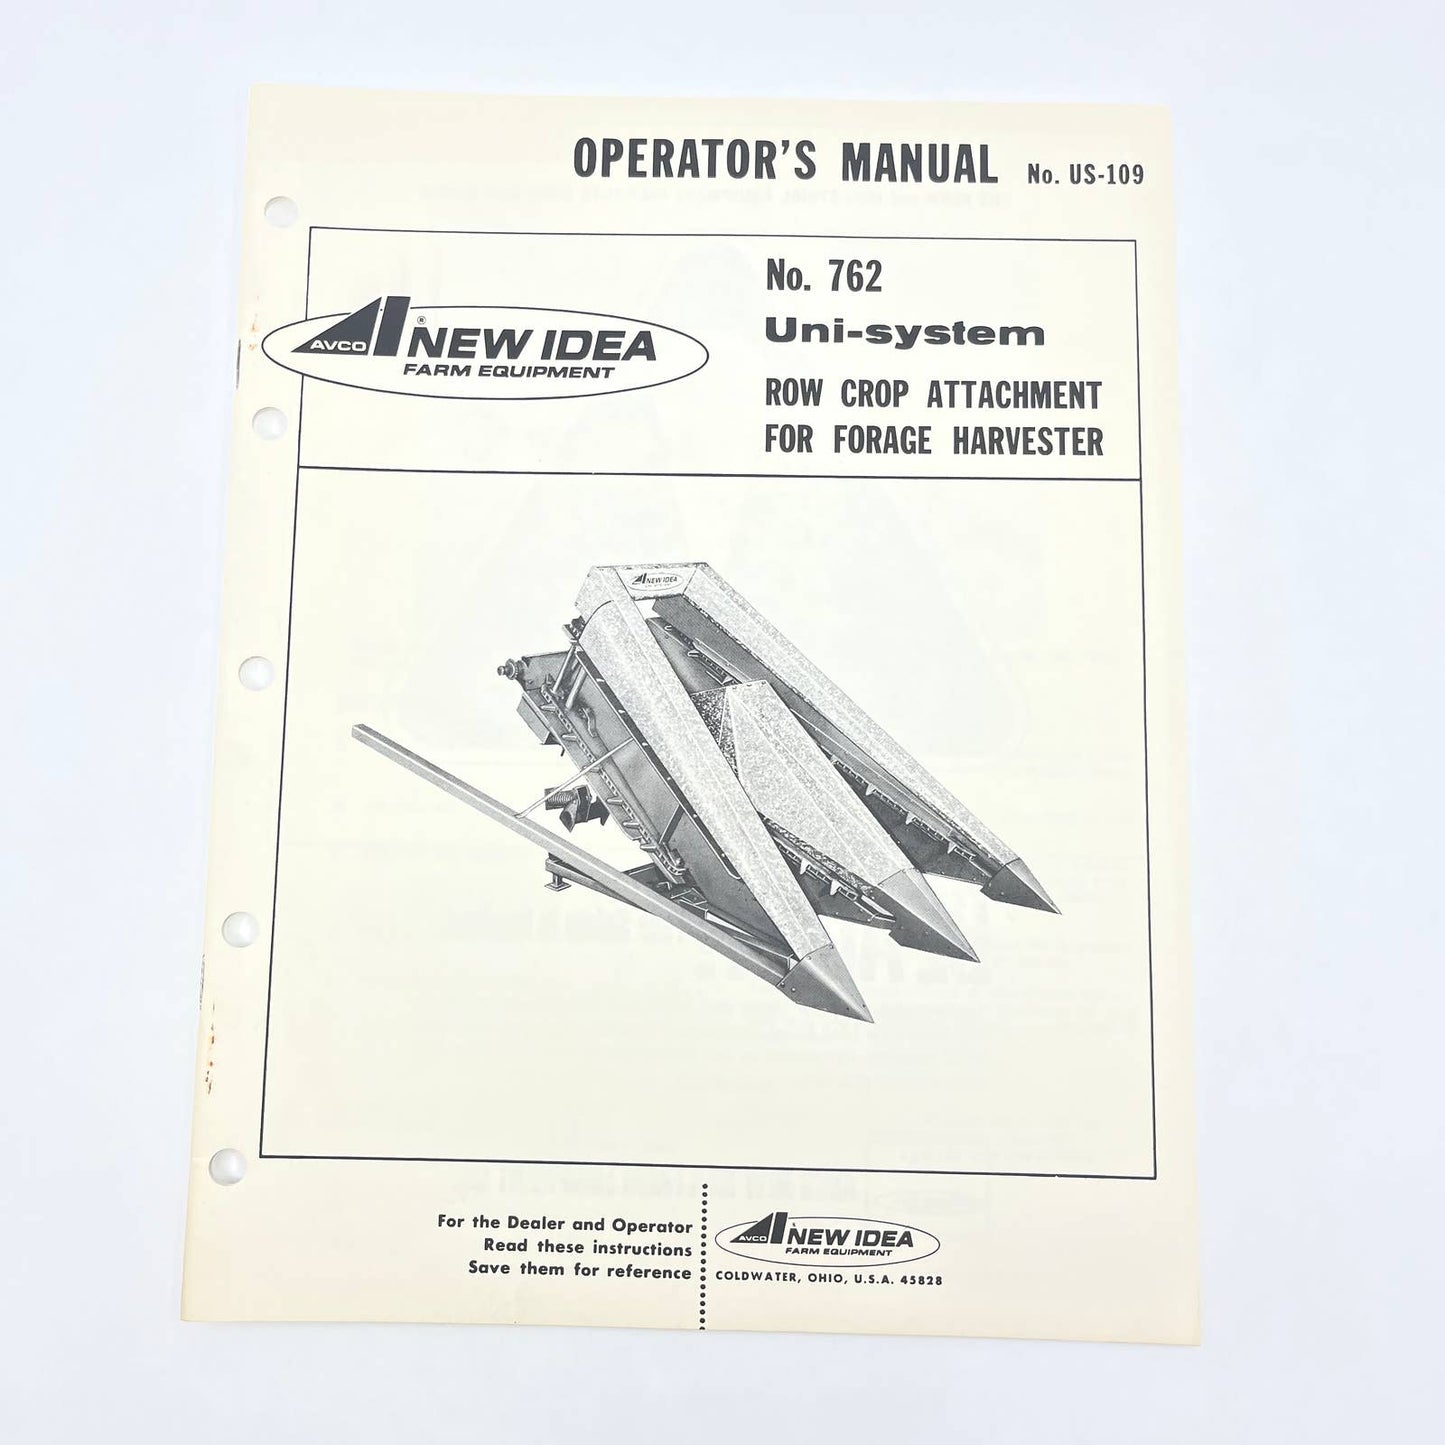 Original 1972 New Idea Operator Manual US-109 Uni-system Row Crop Attachment TB9